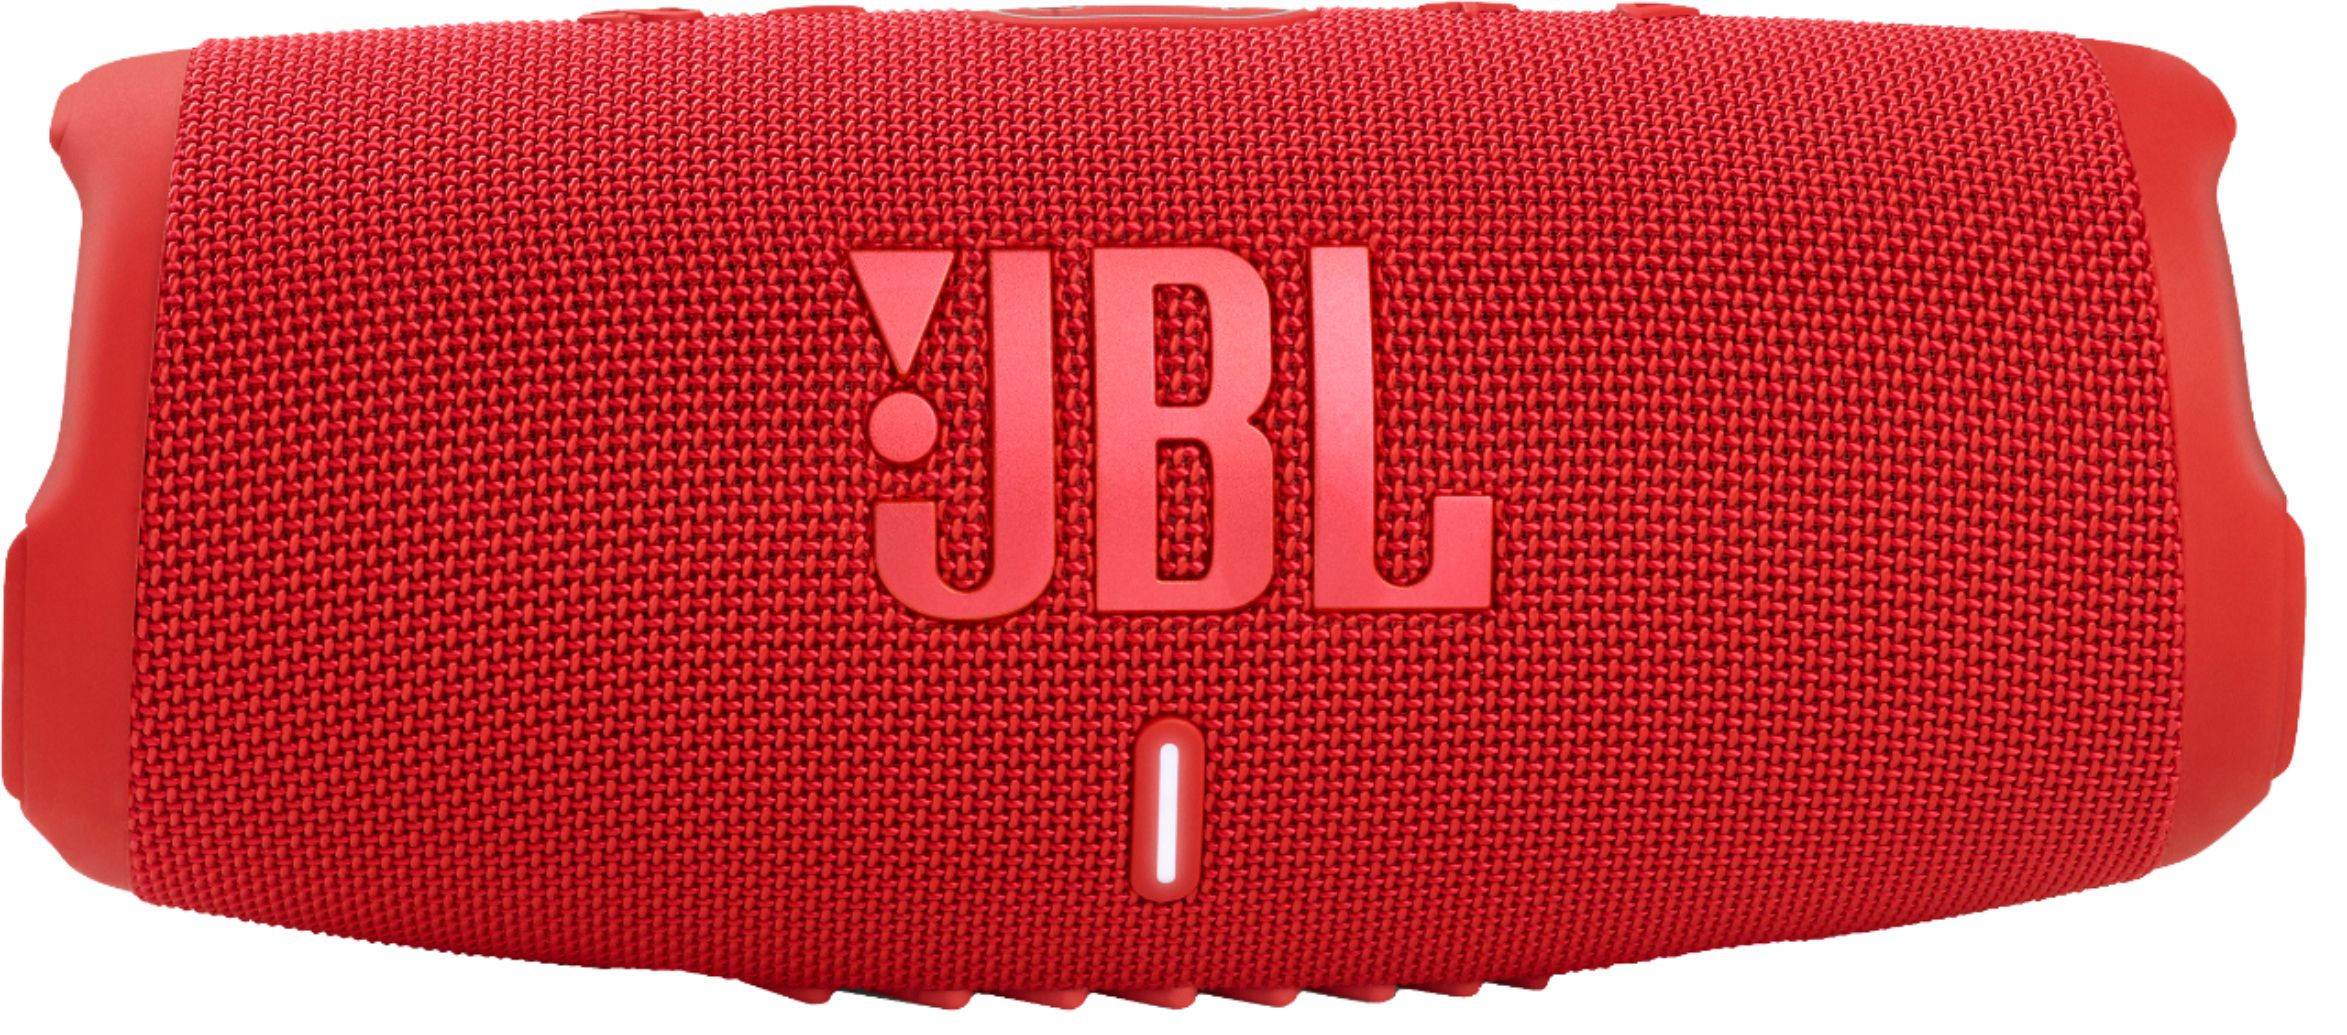 JBL Charge 5 WiFi - JBL Original Pro Sound via Bluetooth and WiFi